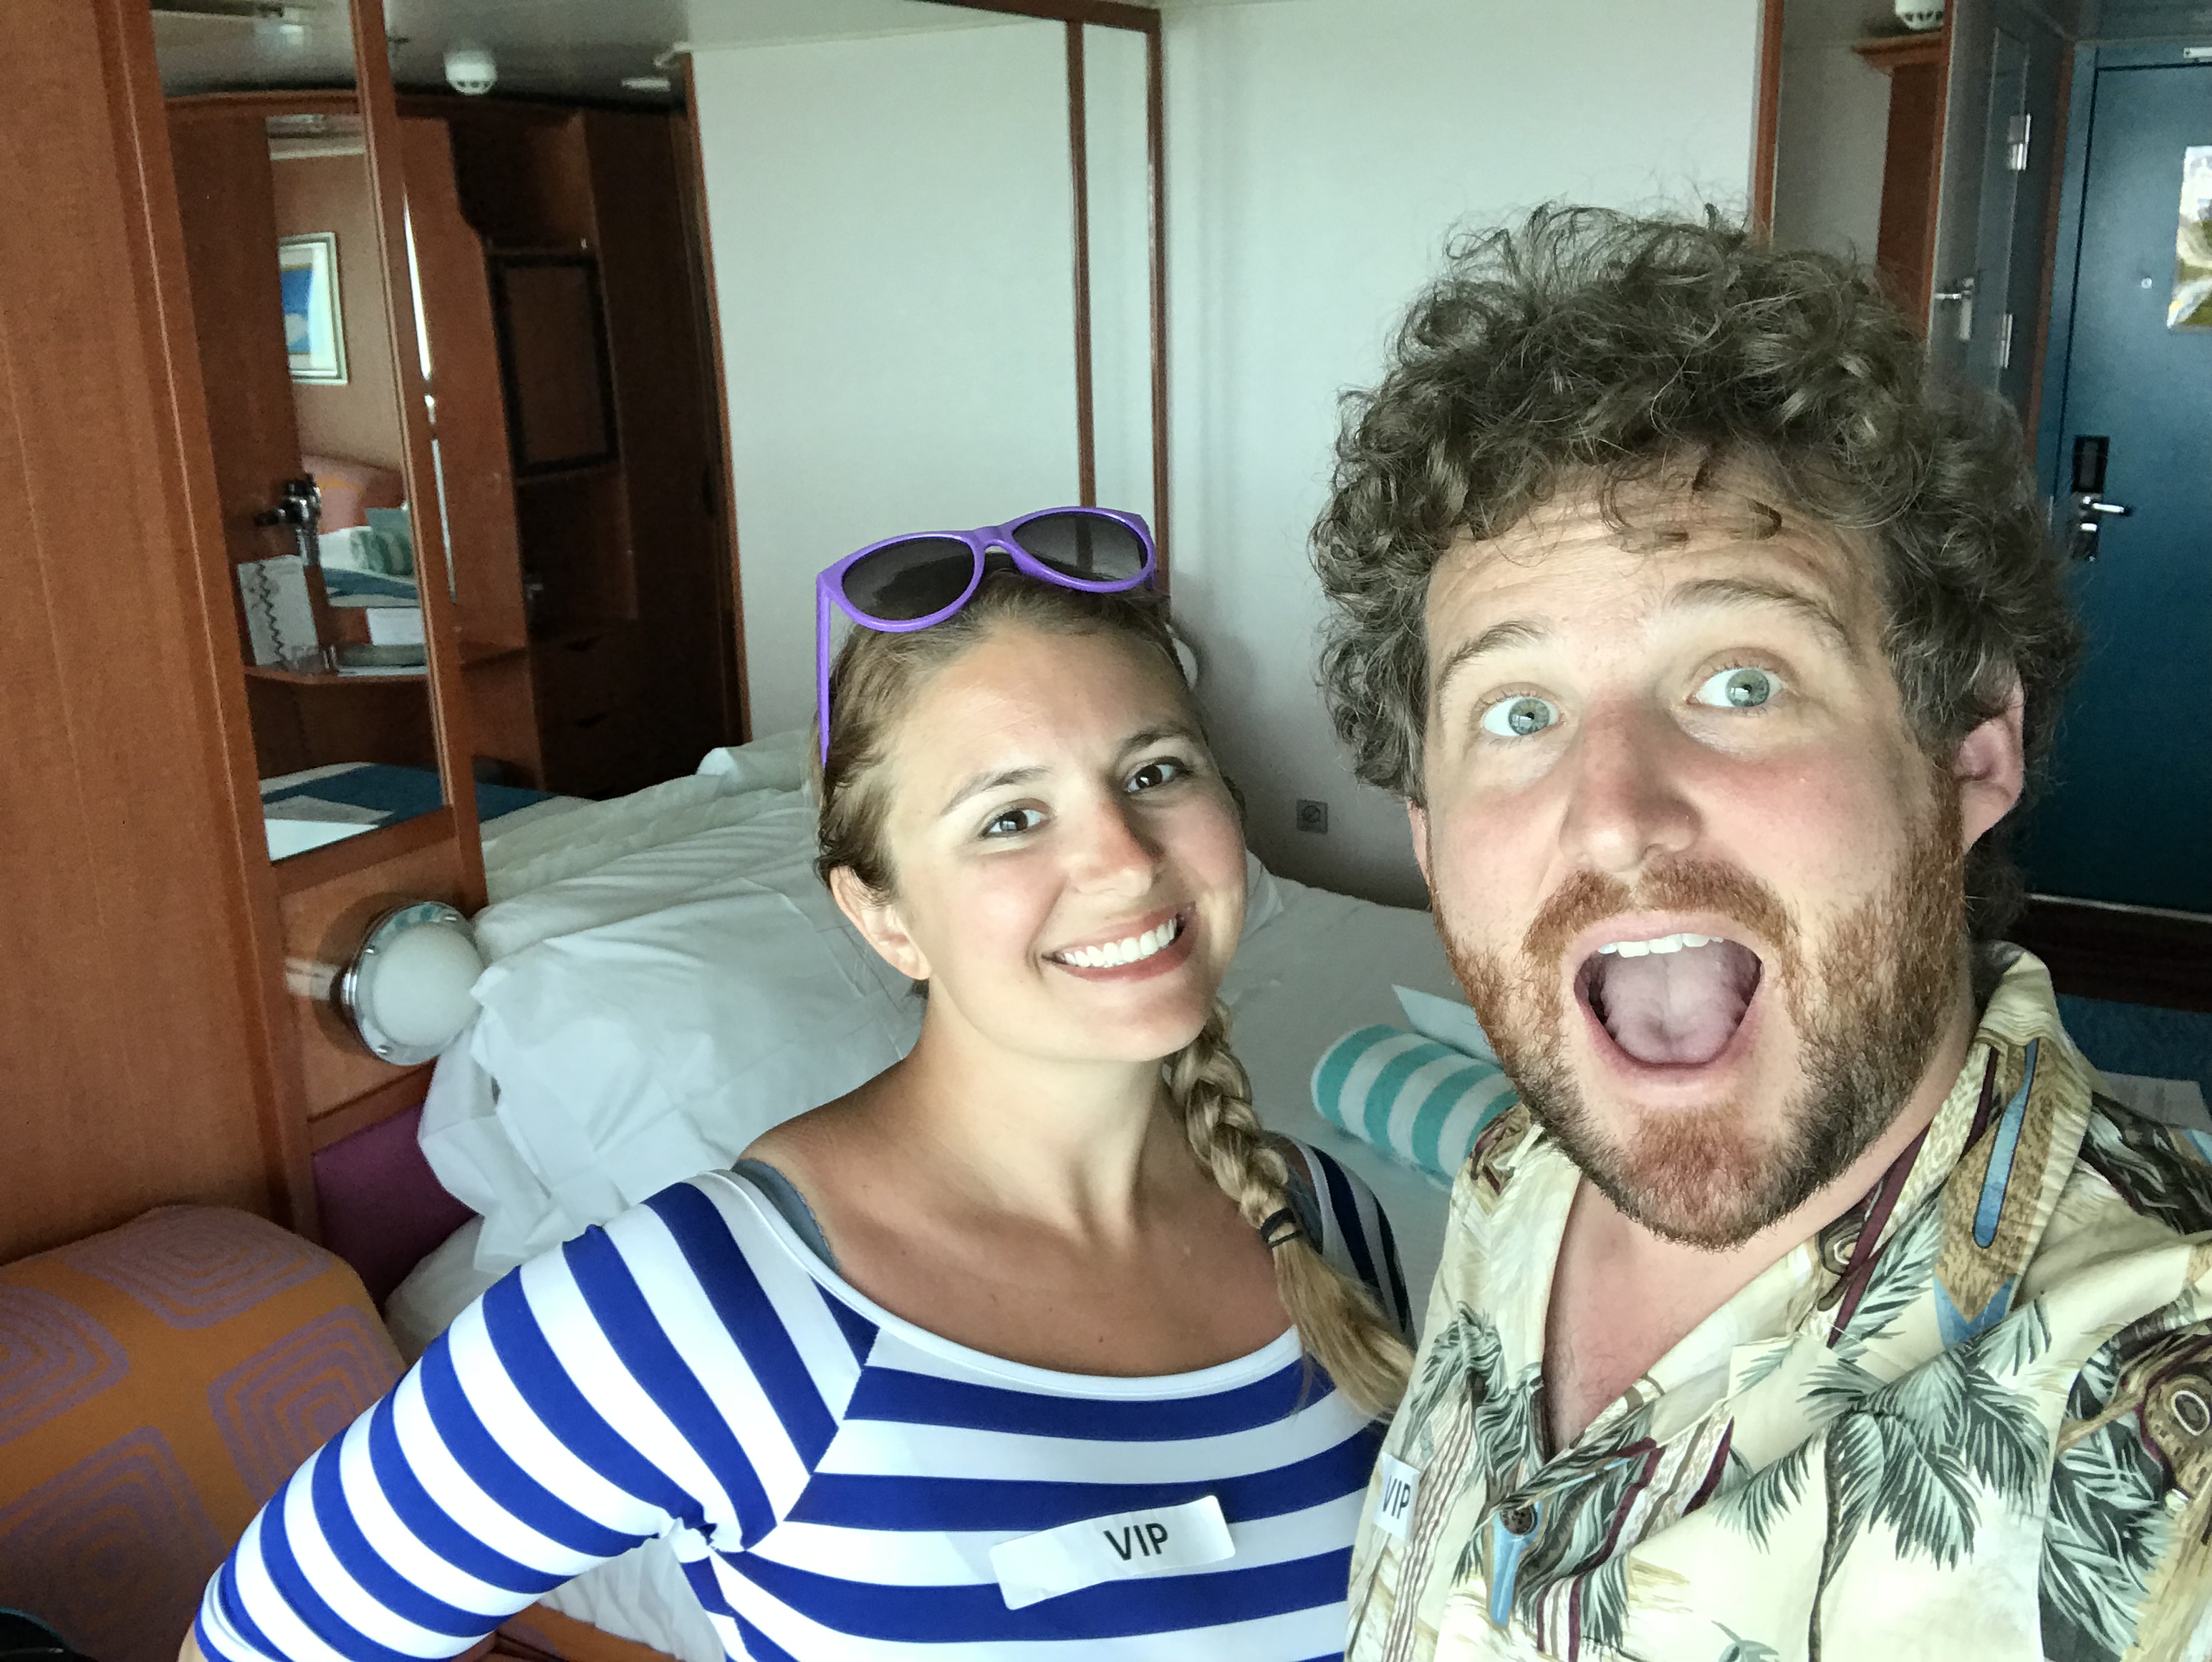 The Norwegian Cruise Line Experience